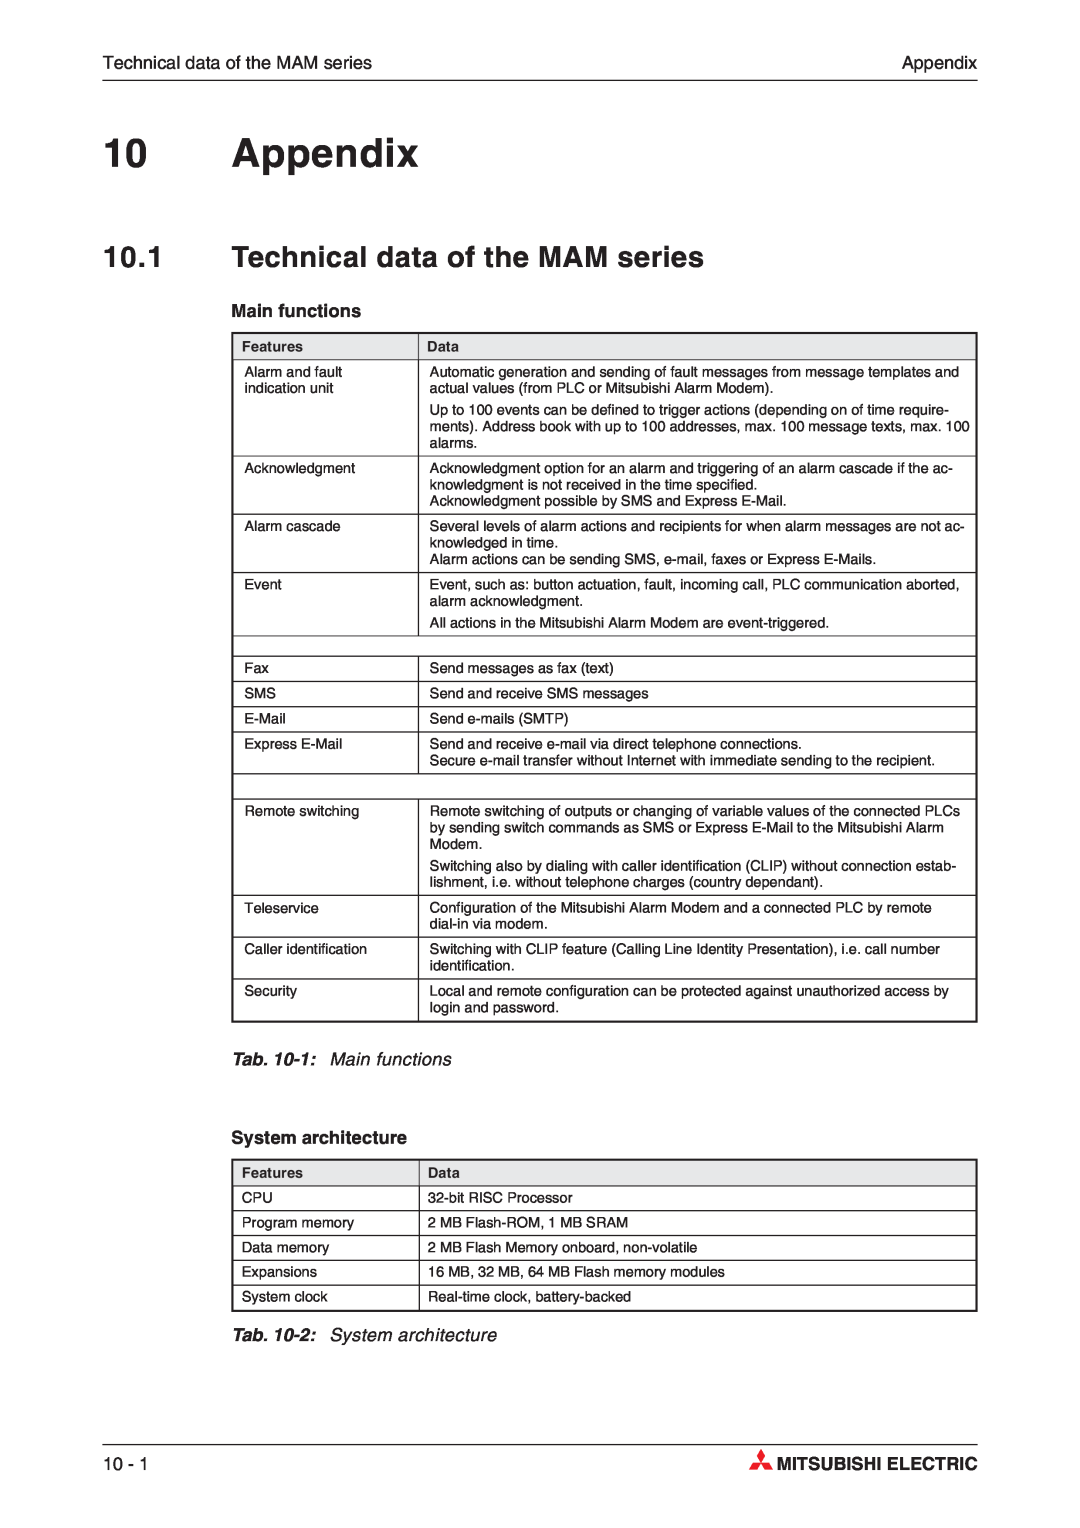 Mitsubishi Electronics MAM-AM6, MAM-GM20, MAM-GM24 Appendix, Technical data of the MAM series, Tab. 10-1 Main functions 